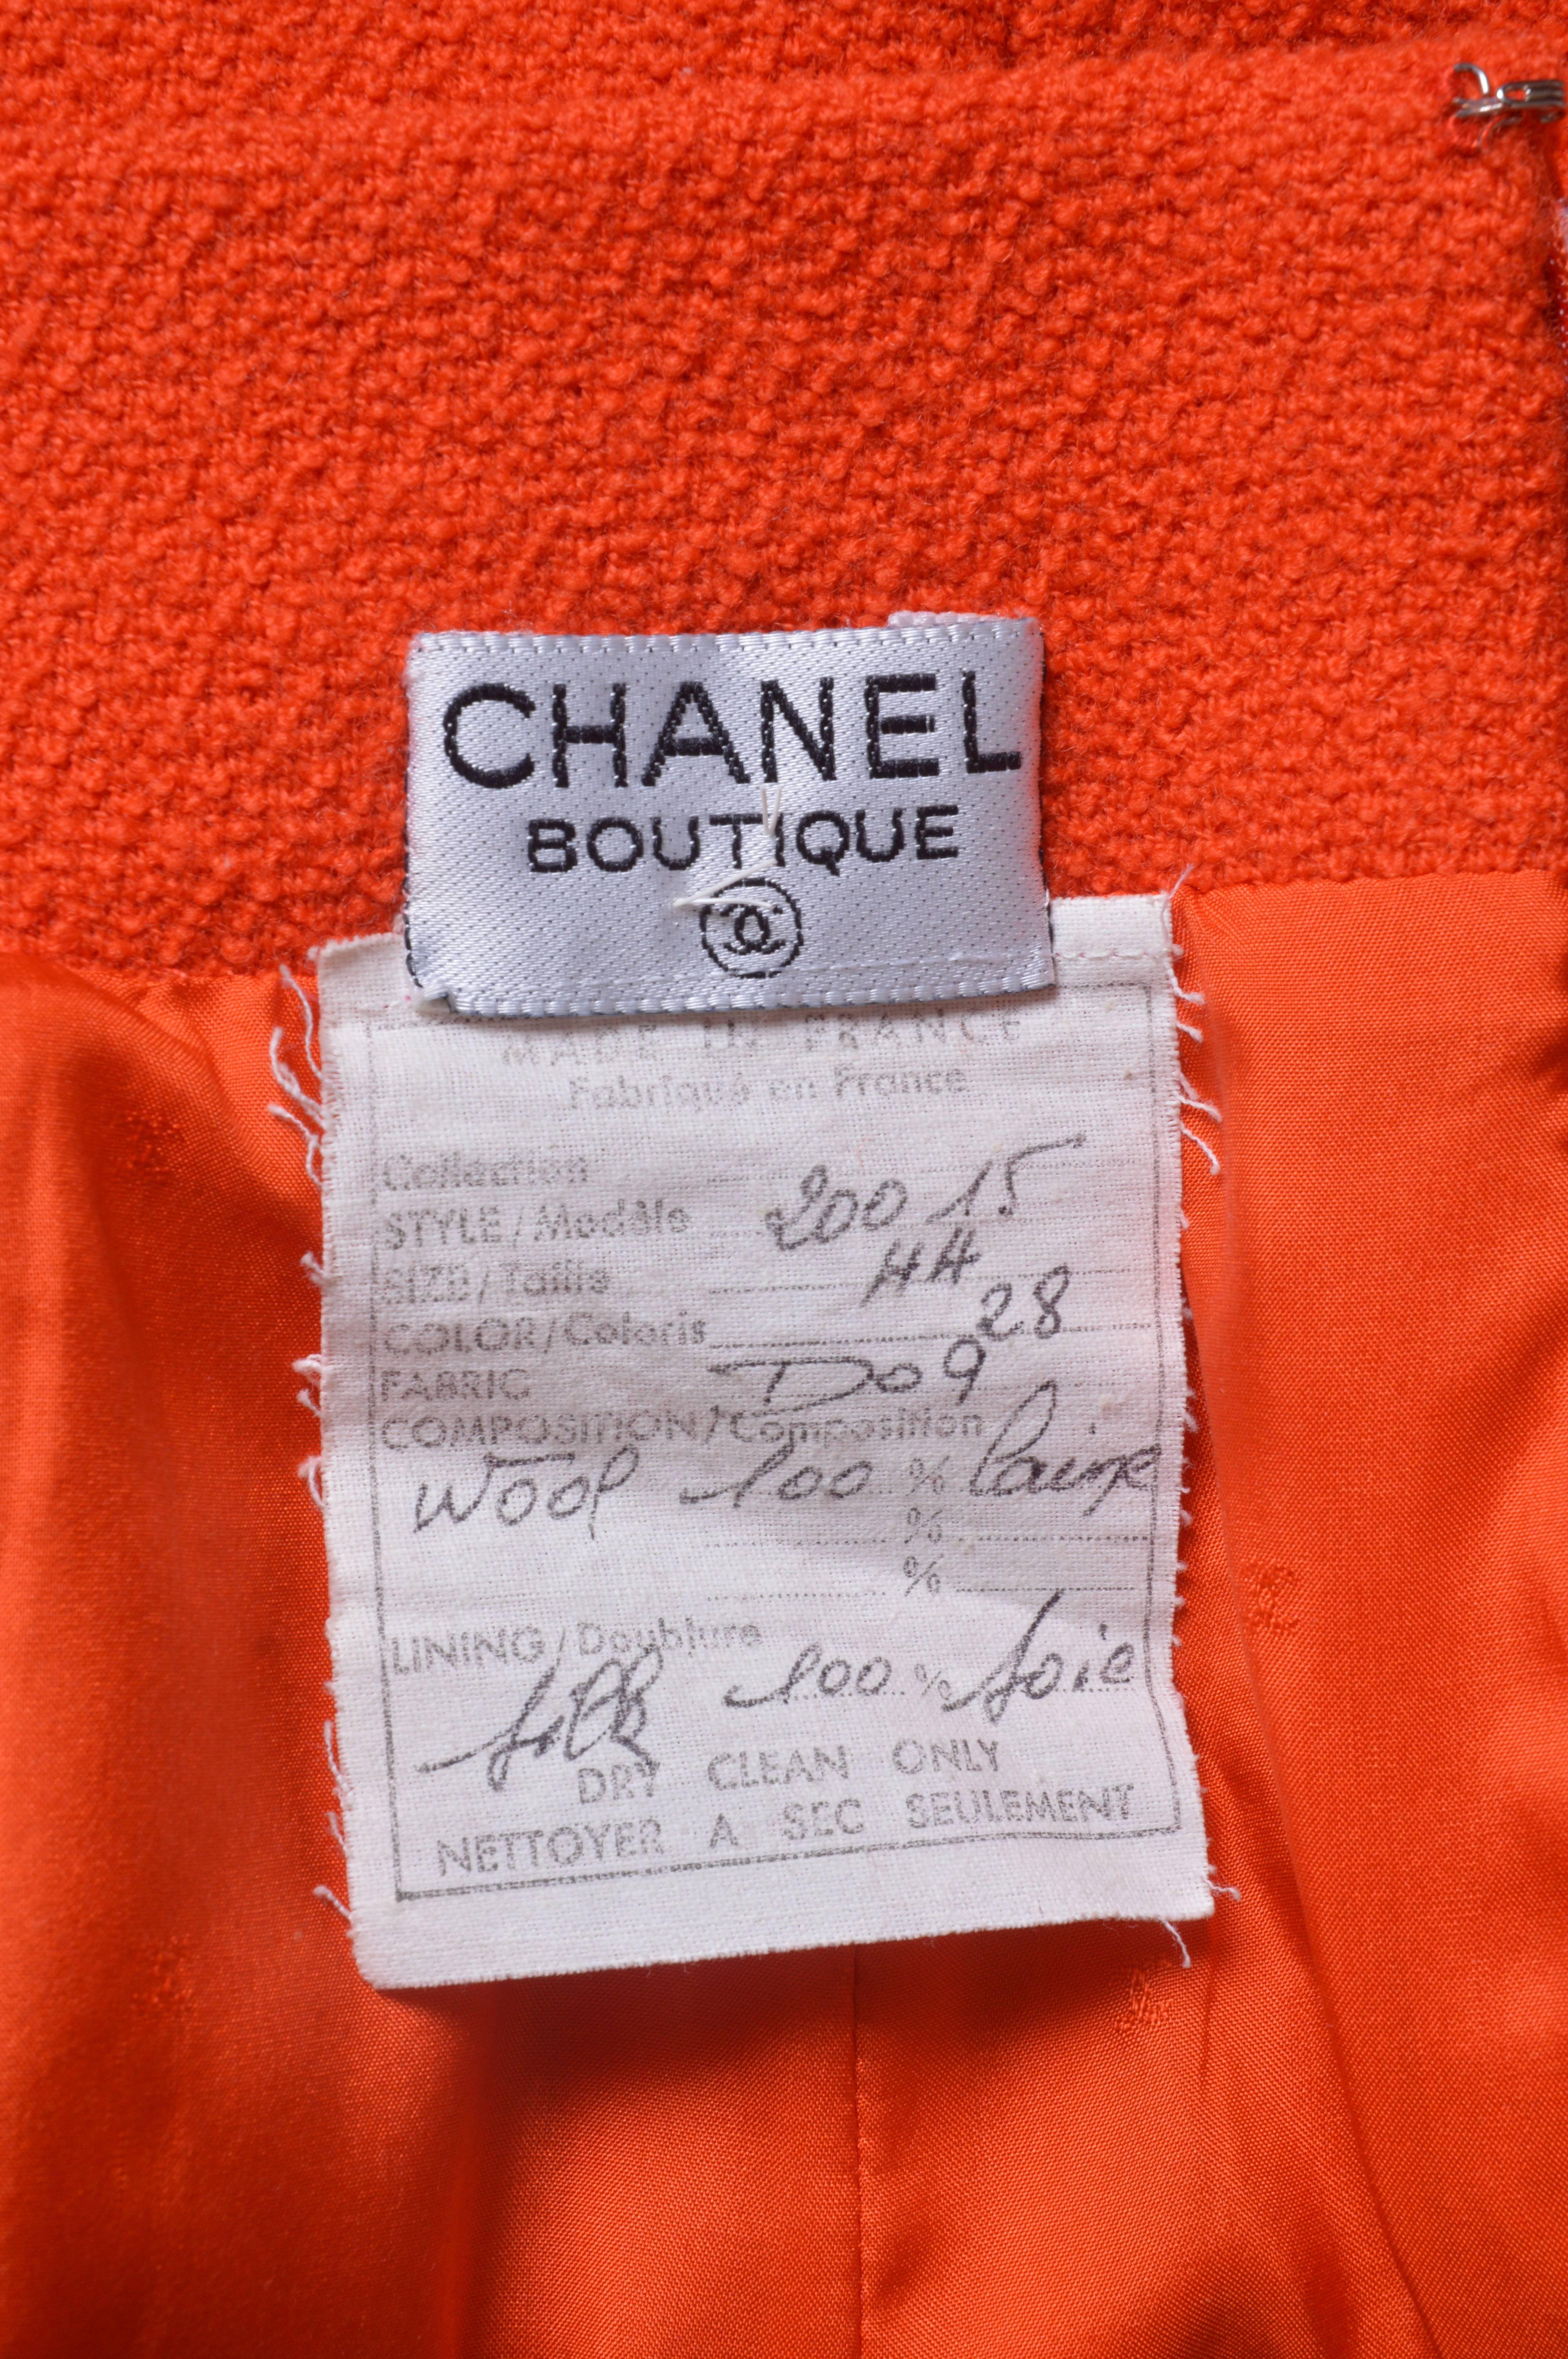 Chanel Boutique Orange and Black Skirt Suit 3